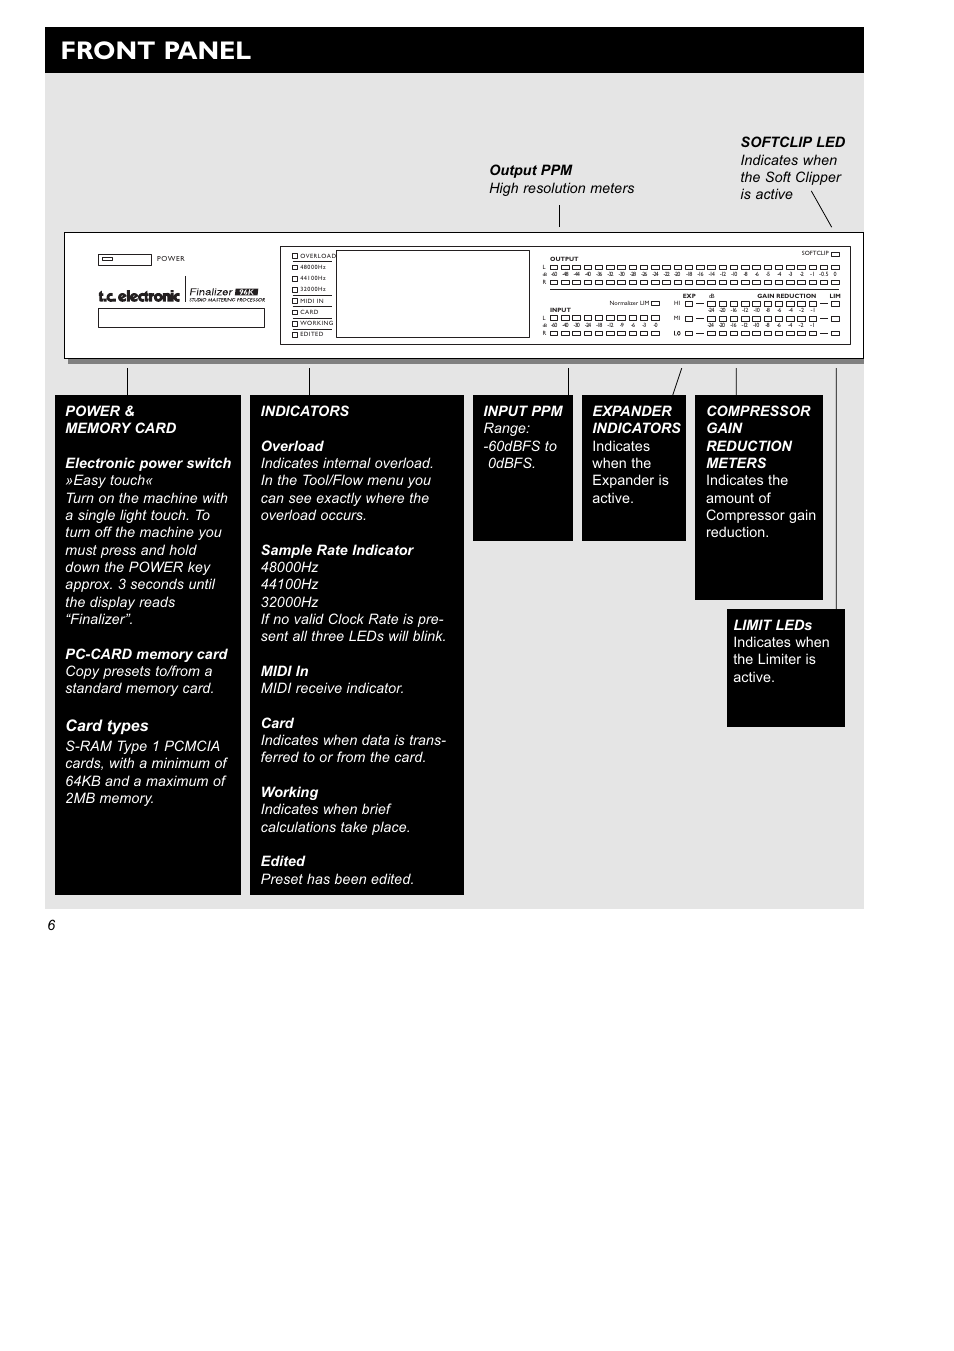 Front panel, Card types | TC Electronic Finalizer 96k User Manual | Page 6  / 56 | Original mode